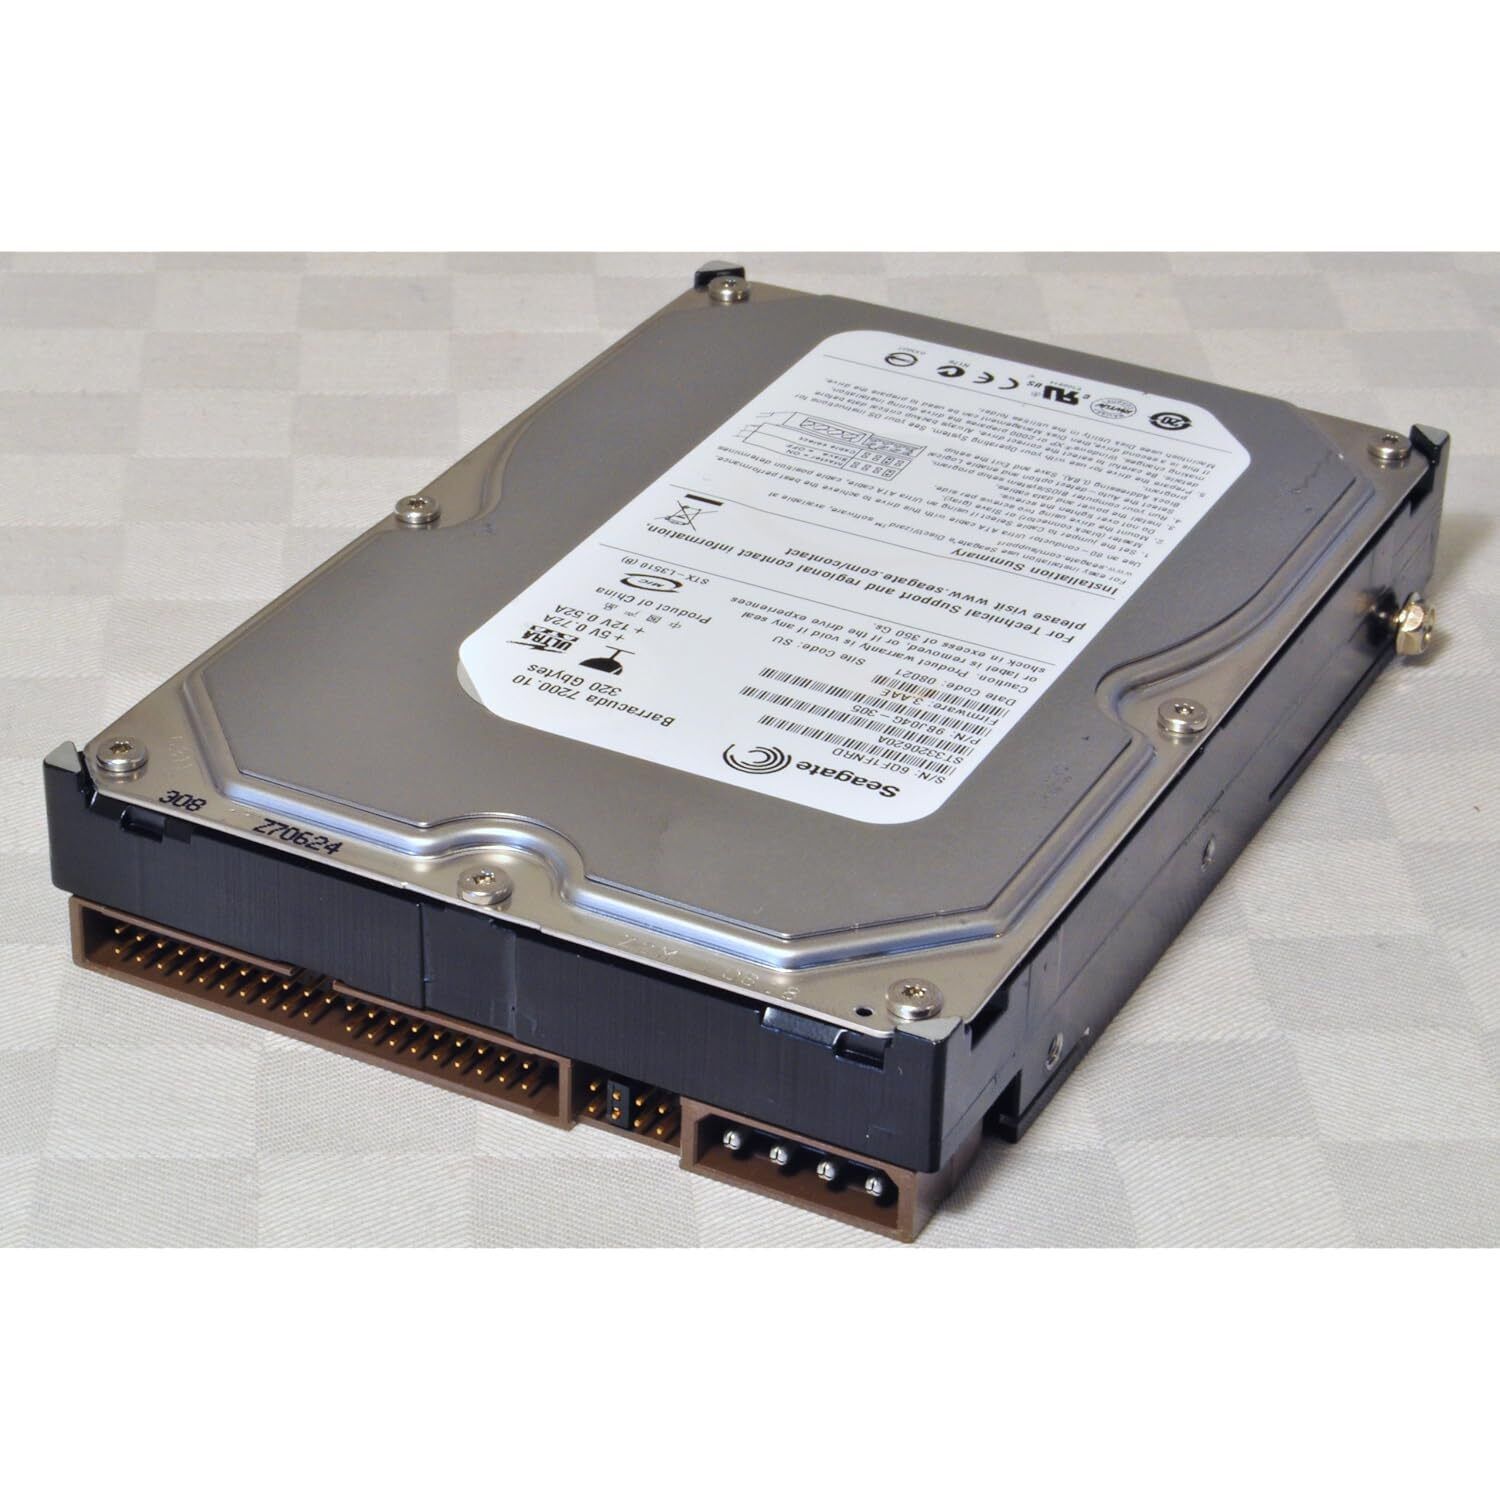 Seagate ST303204N1A1A-RK 320 GB Ultra ATA/100 Internal Hard Drive